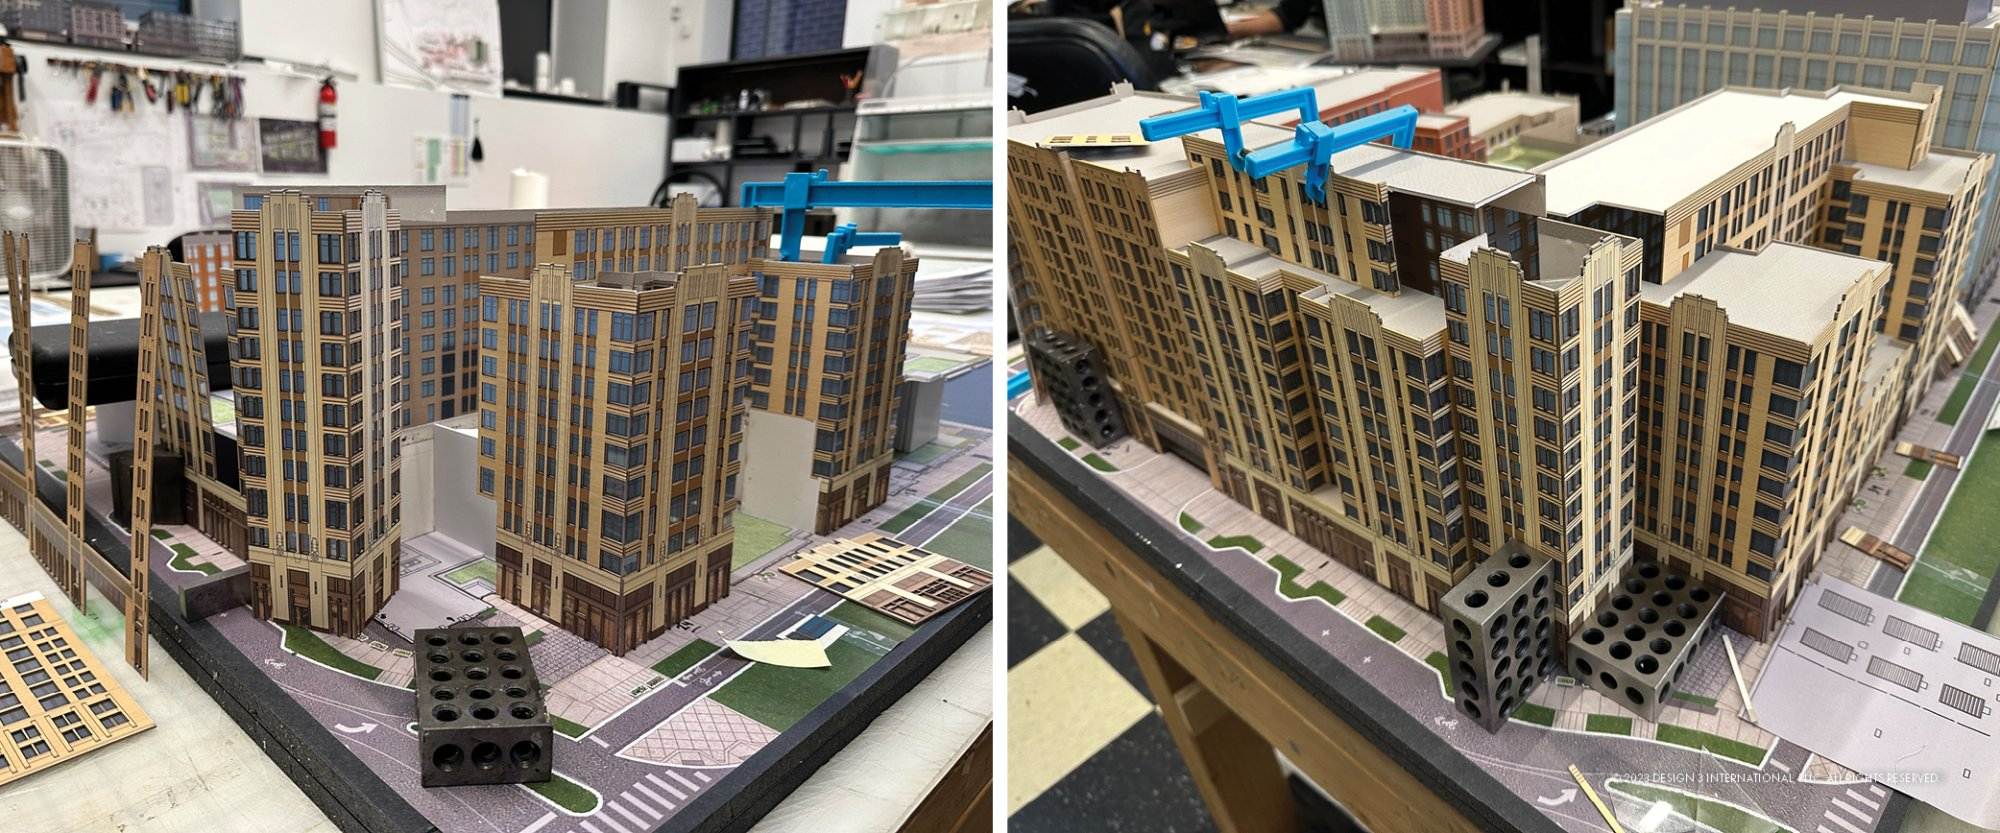 D3i's Twinbrook architectural model construction progress